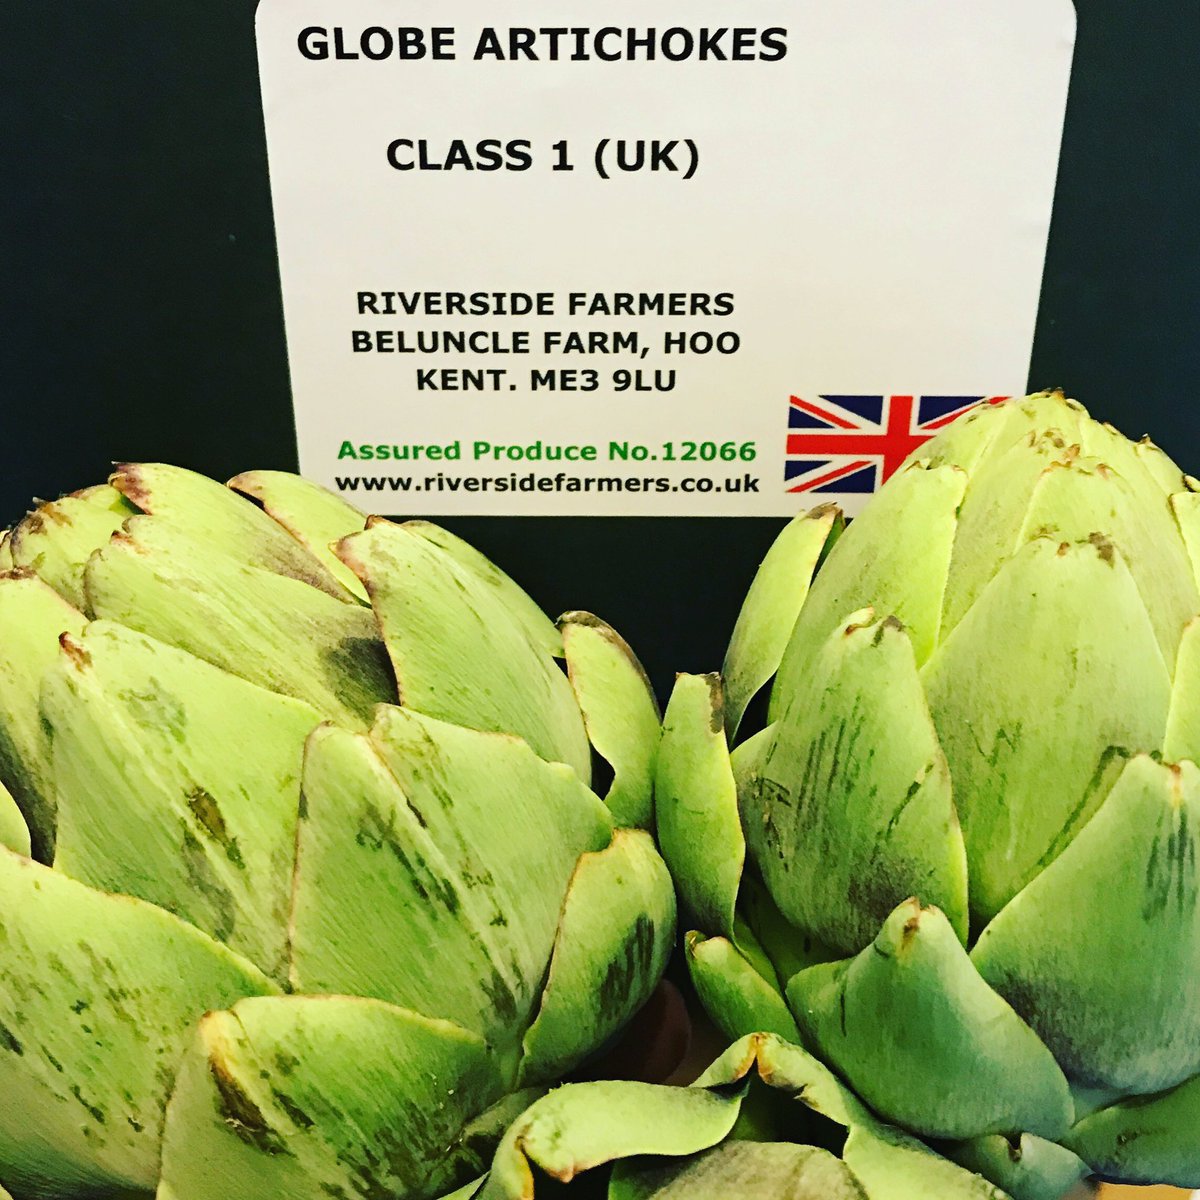 Beautiful Kentish Globe Artichokes in from Beluncle Farm in Hoo. More top class locally grown produce. 🍏💚 #fresh #seasonal #local #produce